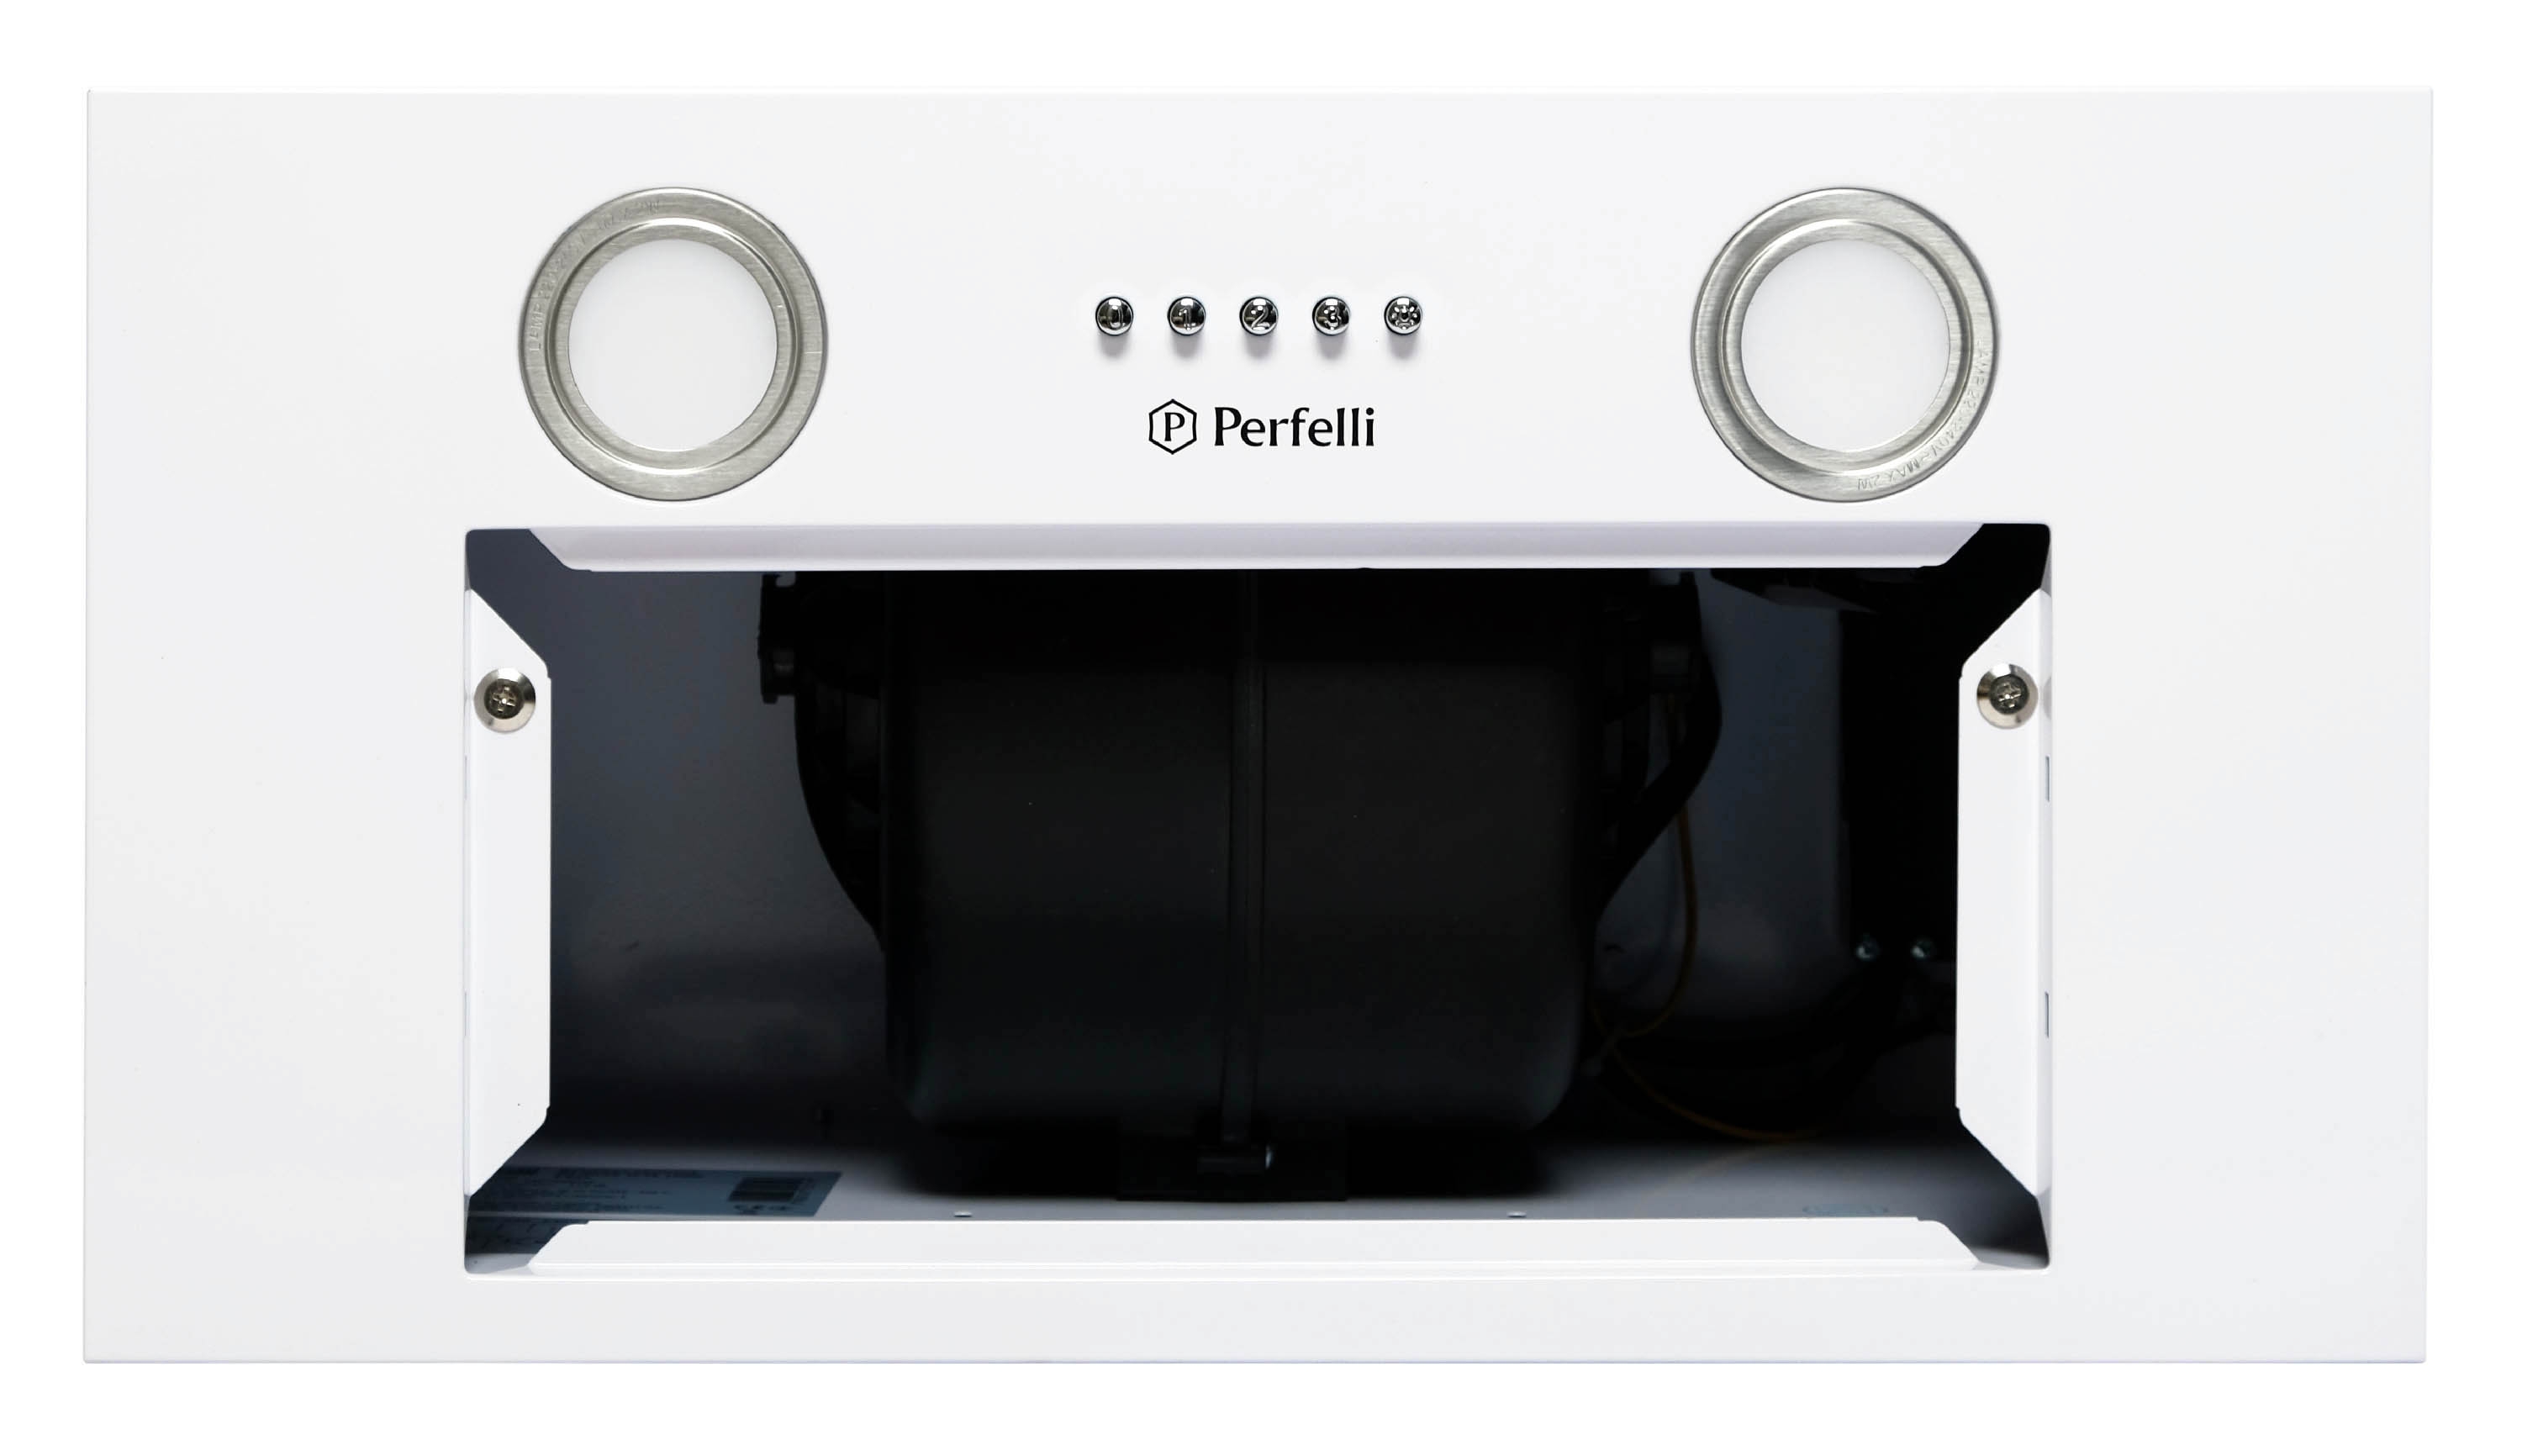 Кухонная вытяжка Perfelli BI 5652 WH 1000 LED характеристики - фотография 7